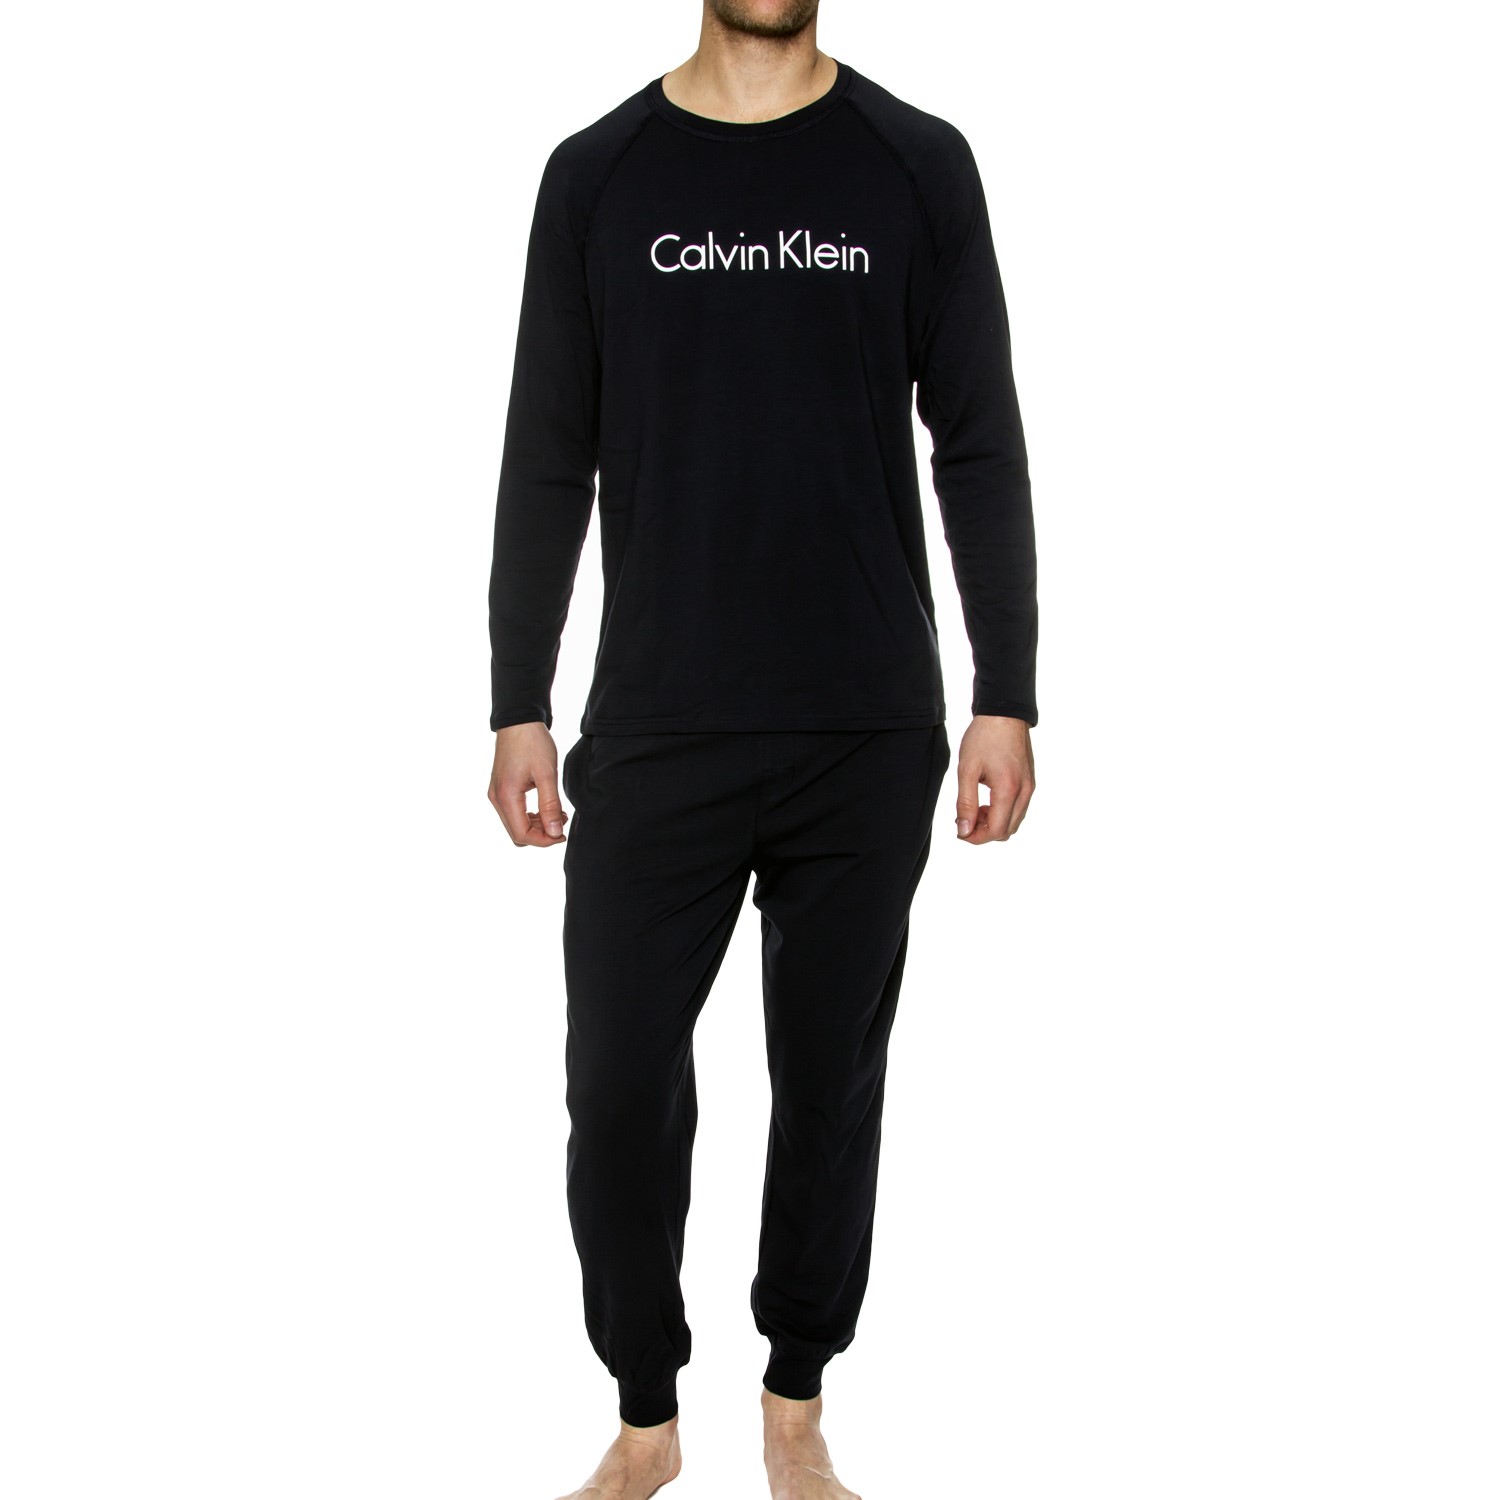 Calvin Klein LS Pant Set - Pyjamas - Nattøj - Undertøj - Timarco.dk